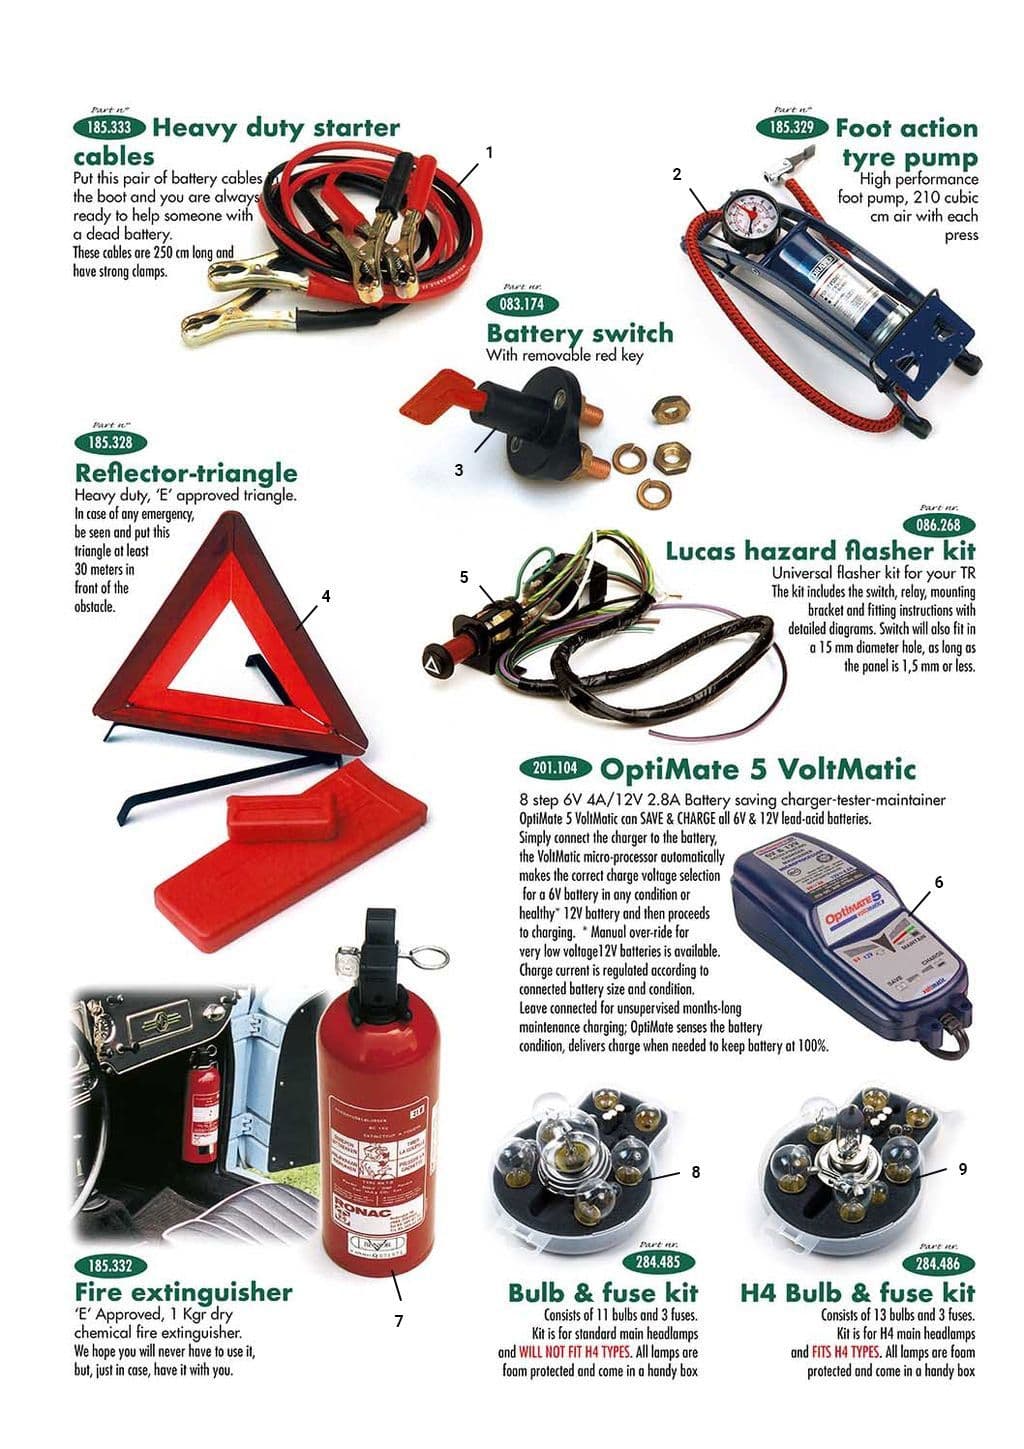 Practical accessories - Turvallisuustuotteet - Huolto & säilytys - Triumph GT6 MKI-III 1966-1973 - Practical accessories - 1